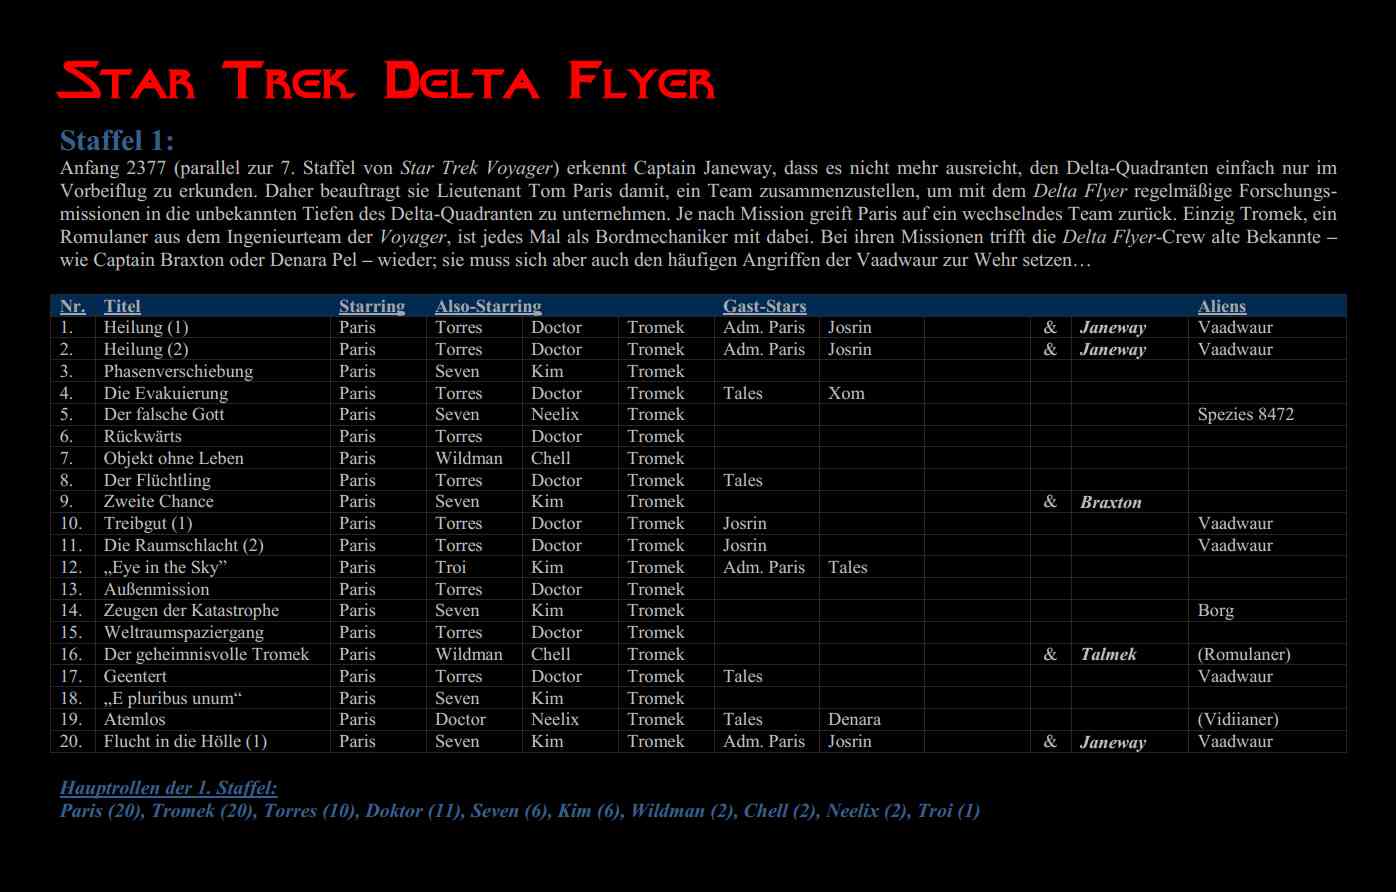 Delta Flyer Season 1